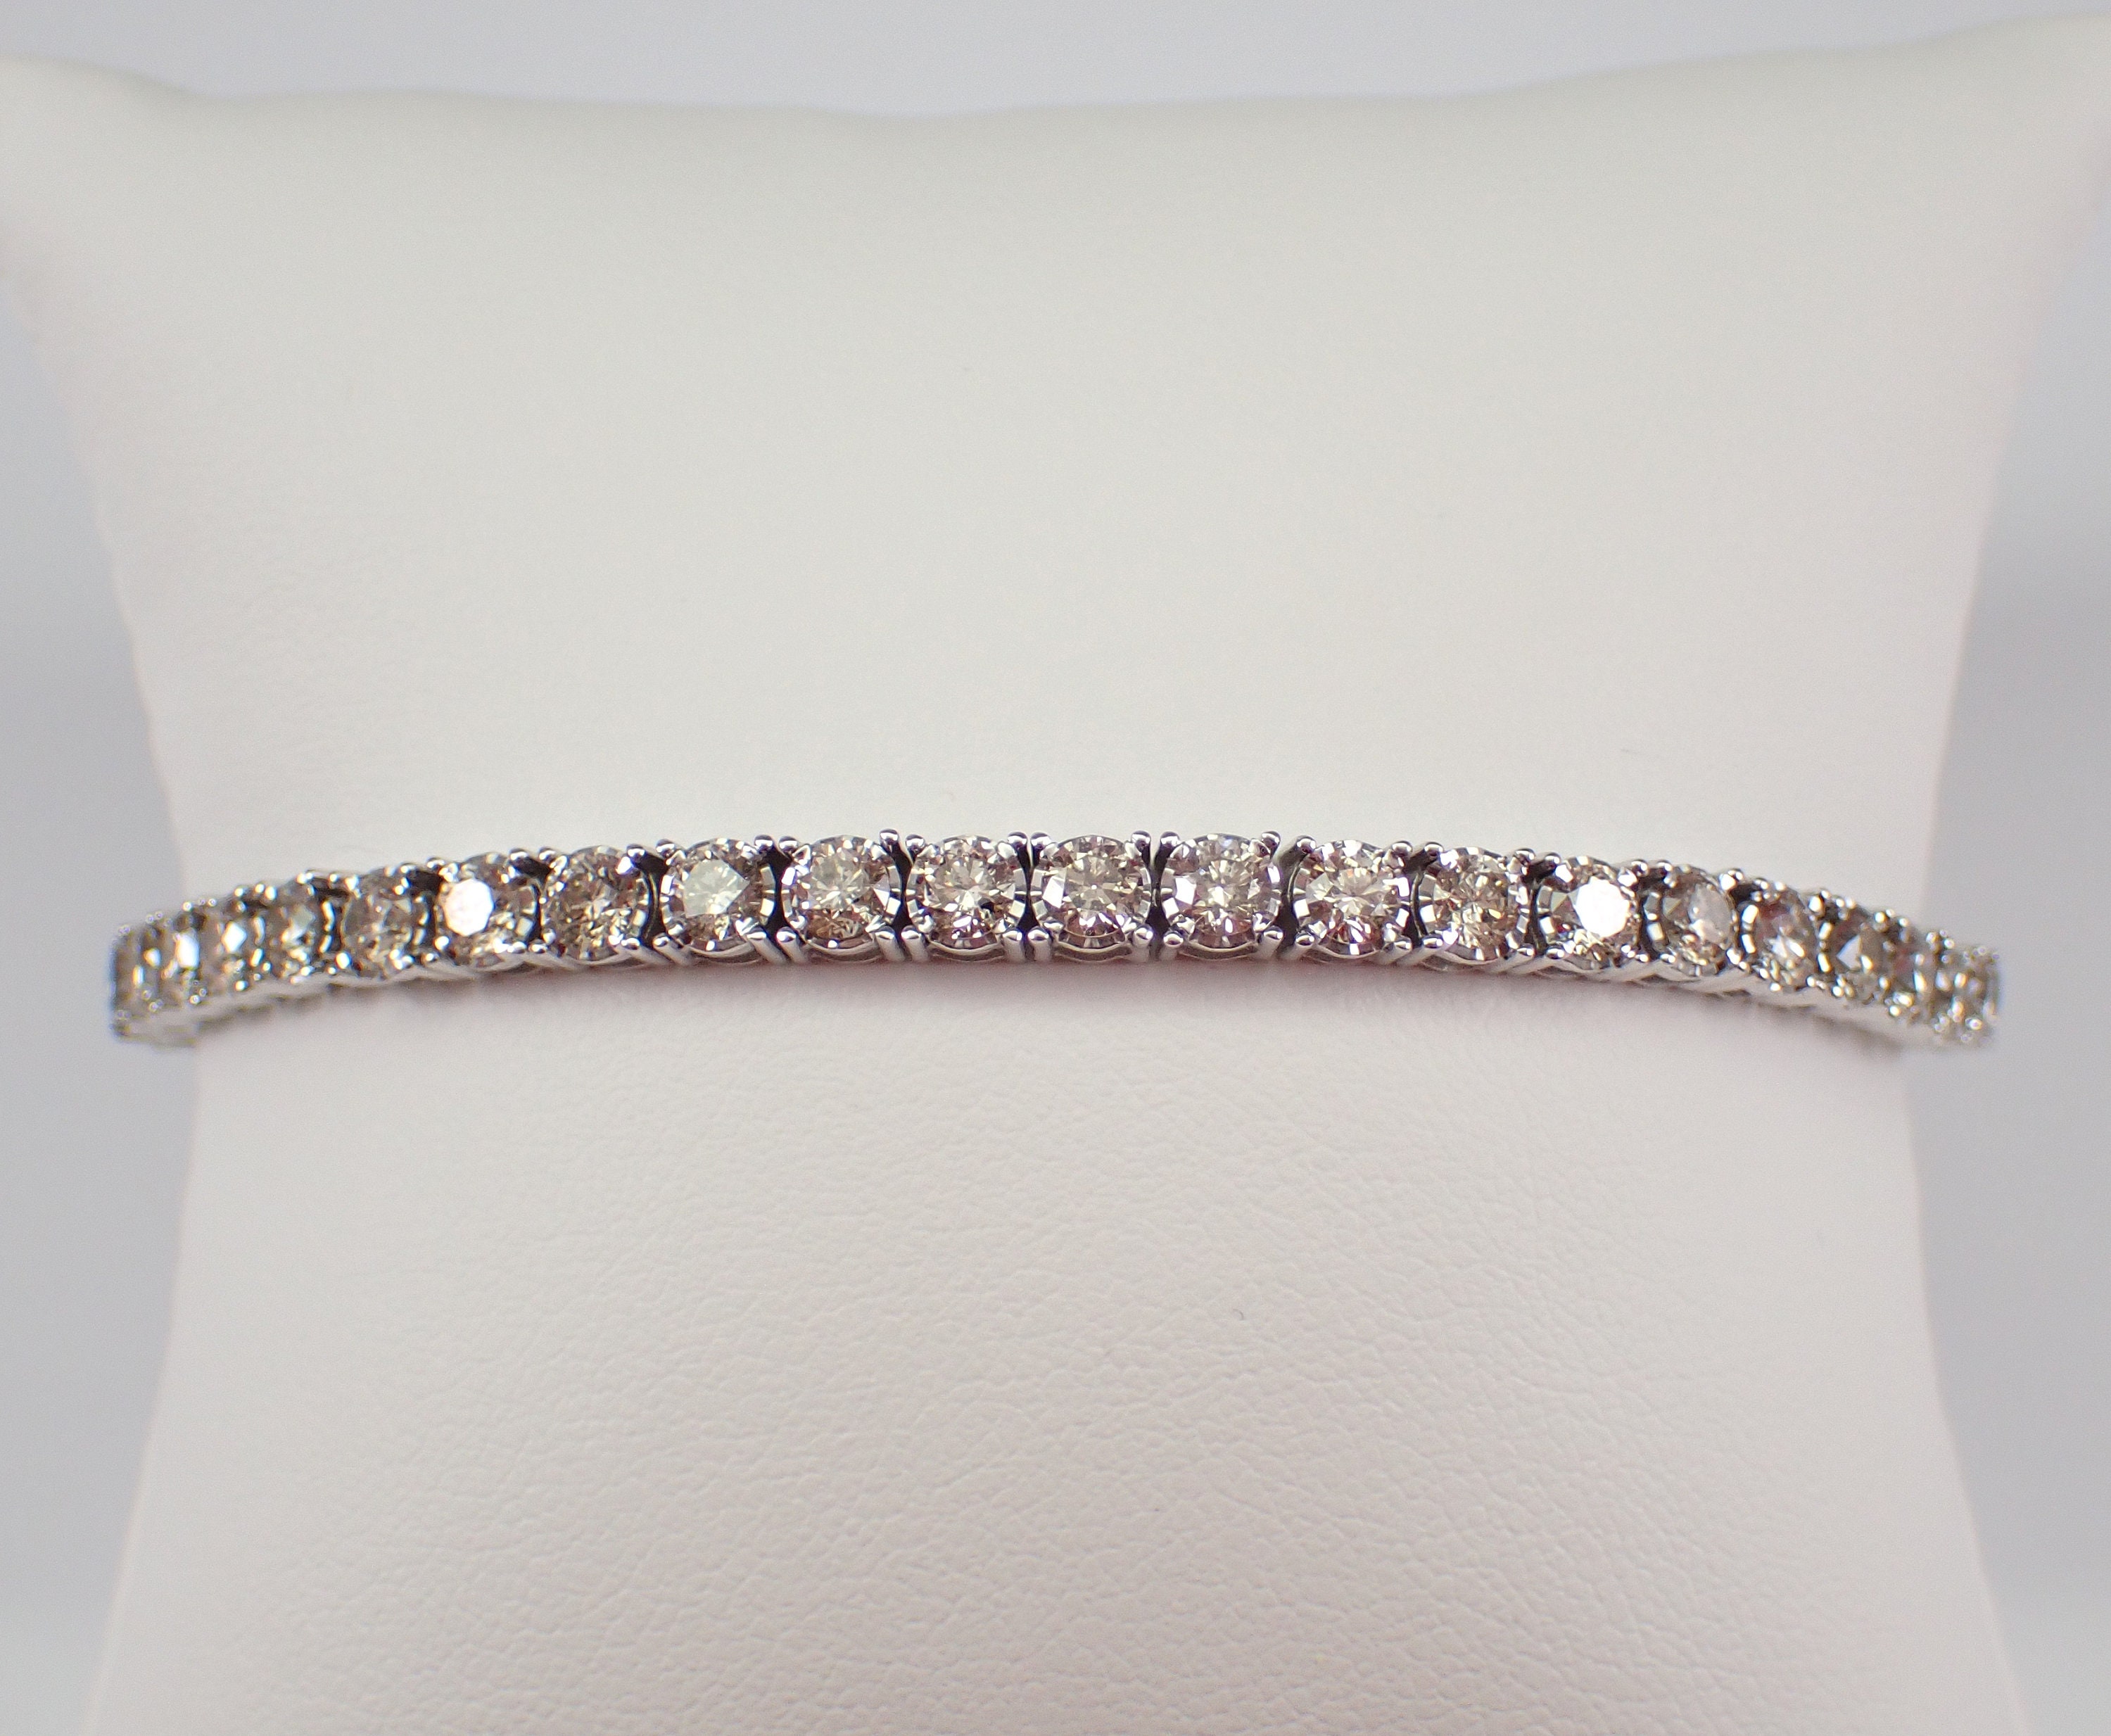 7 Ct Round Cut Lab Created Diamond Women's Tennis Bracelet 14k White Gold  Finish | eBay